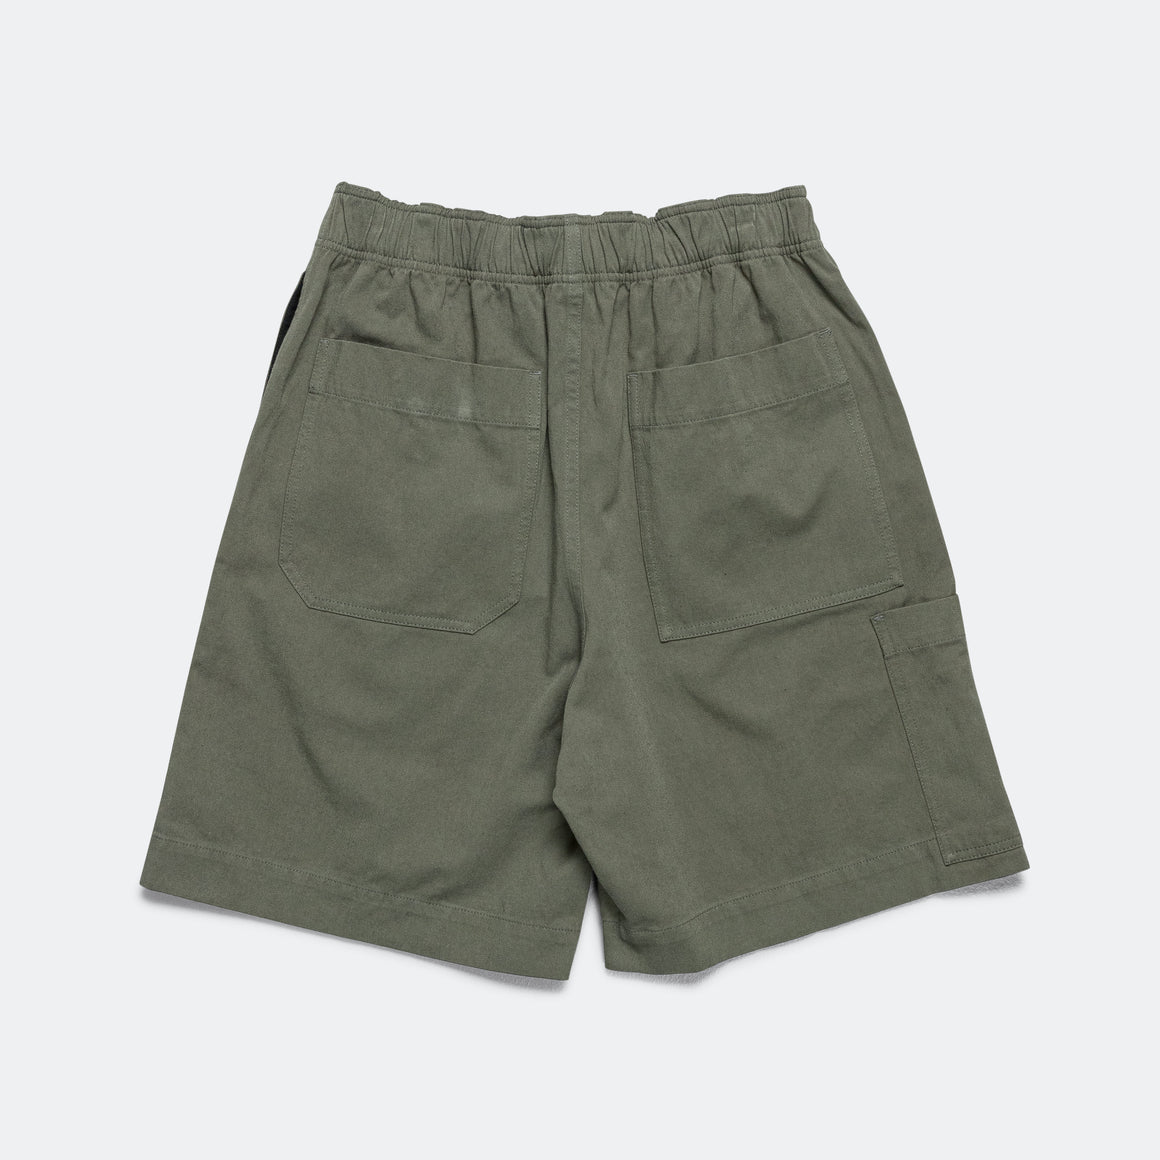 Pull Up Shorts - Uniform Green Cotton Hemp Twill (LBS)